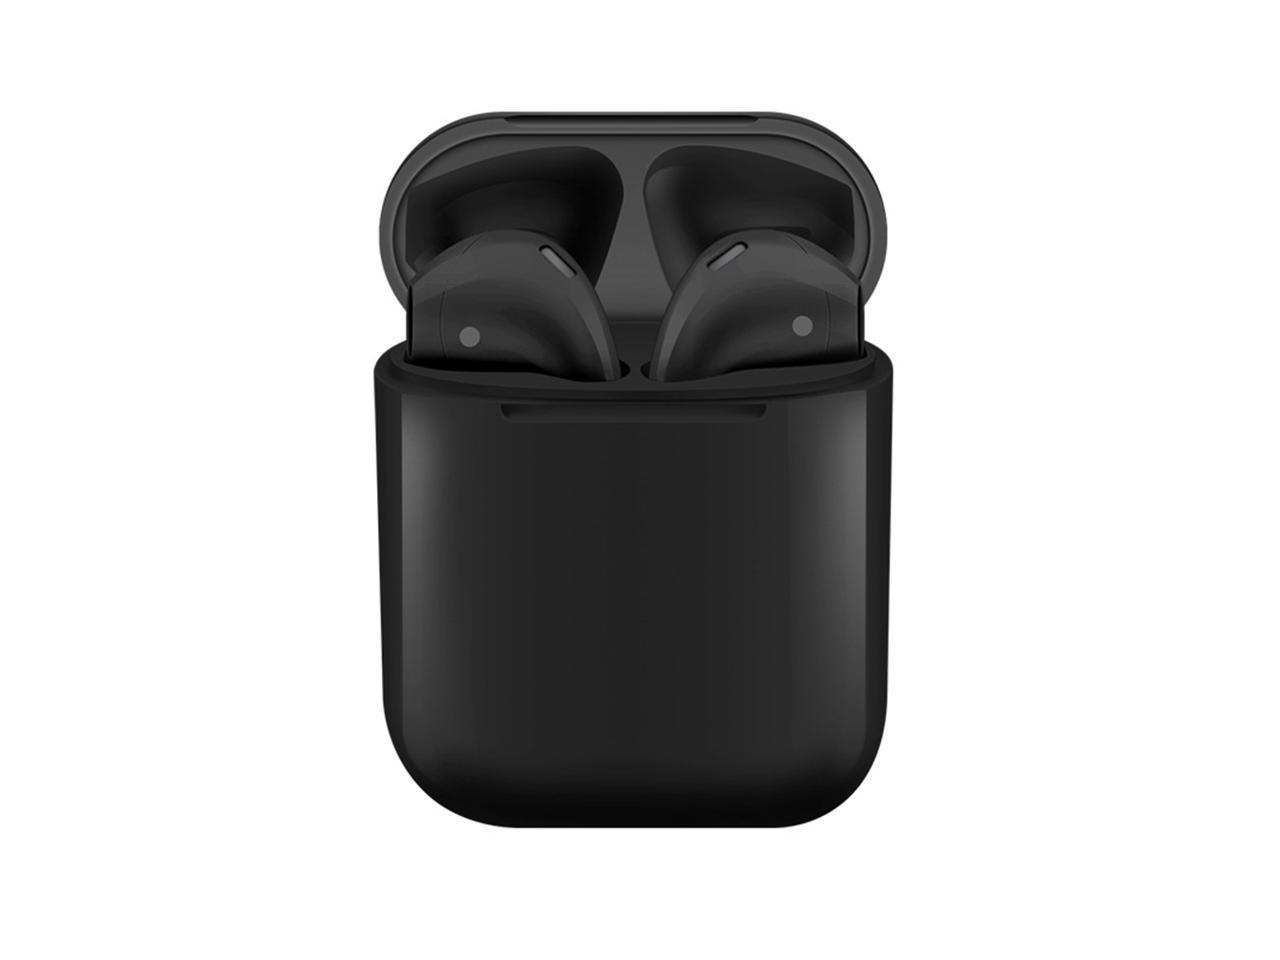 Für Apple Android/iPhone/AirPods Pro In-Ear-Headset mit Geräuschunterdrückung Kabelloses Touch-Headset Tragbares wasserdichtes Sport-Headset Weiß i12 Bluetooth-Headset